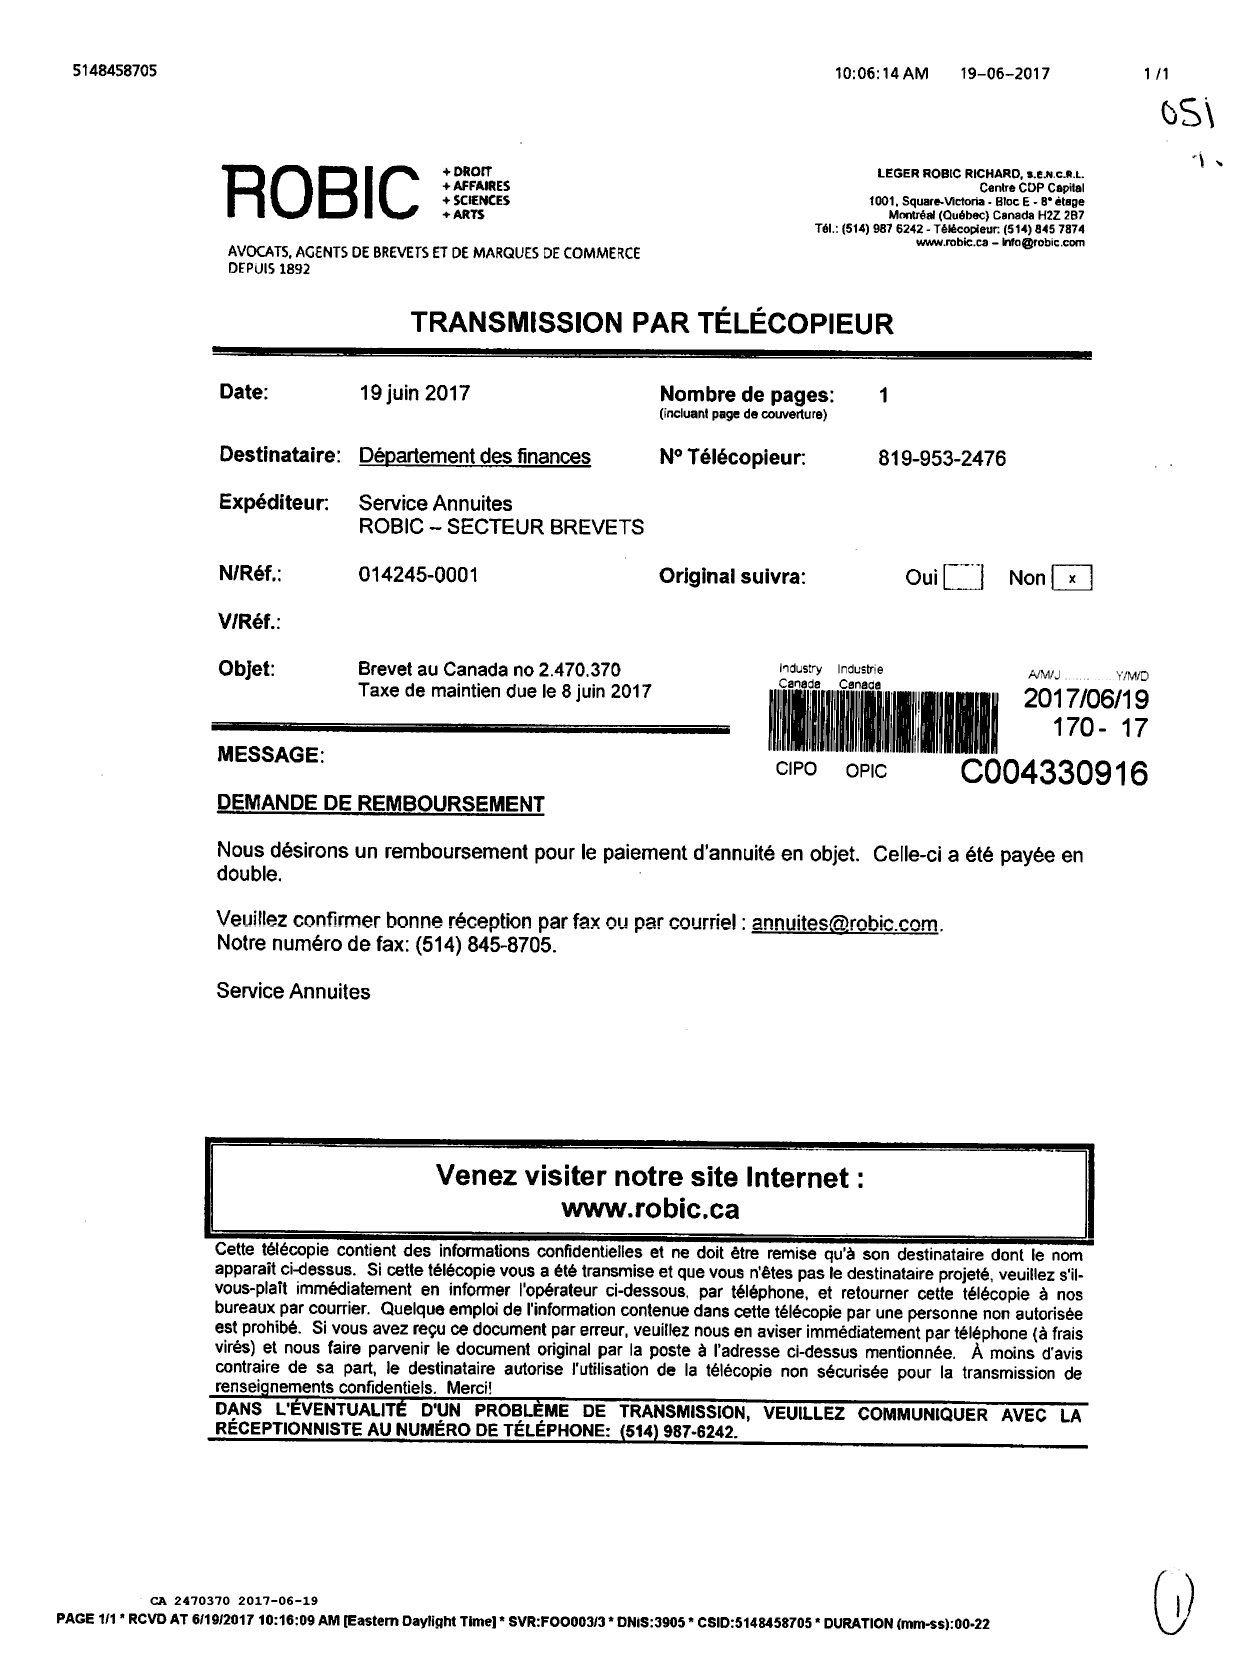 Document de brevet canadien 2470370. Correspondance taxe de maintien 20170619. Image 1 de 1